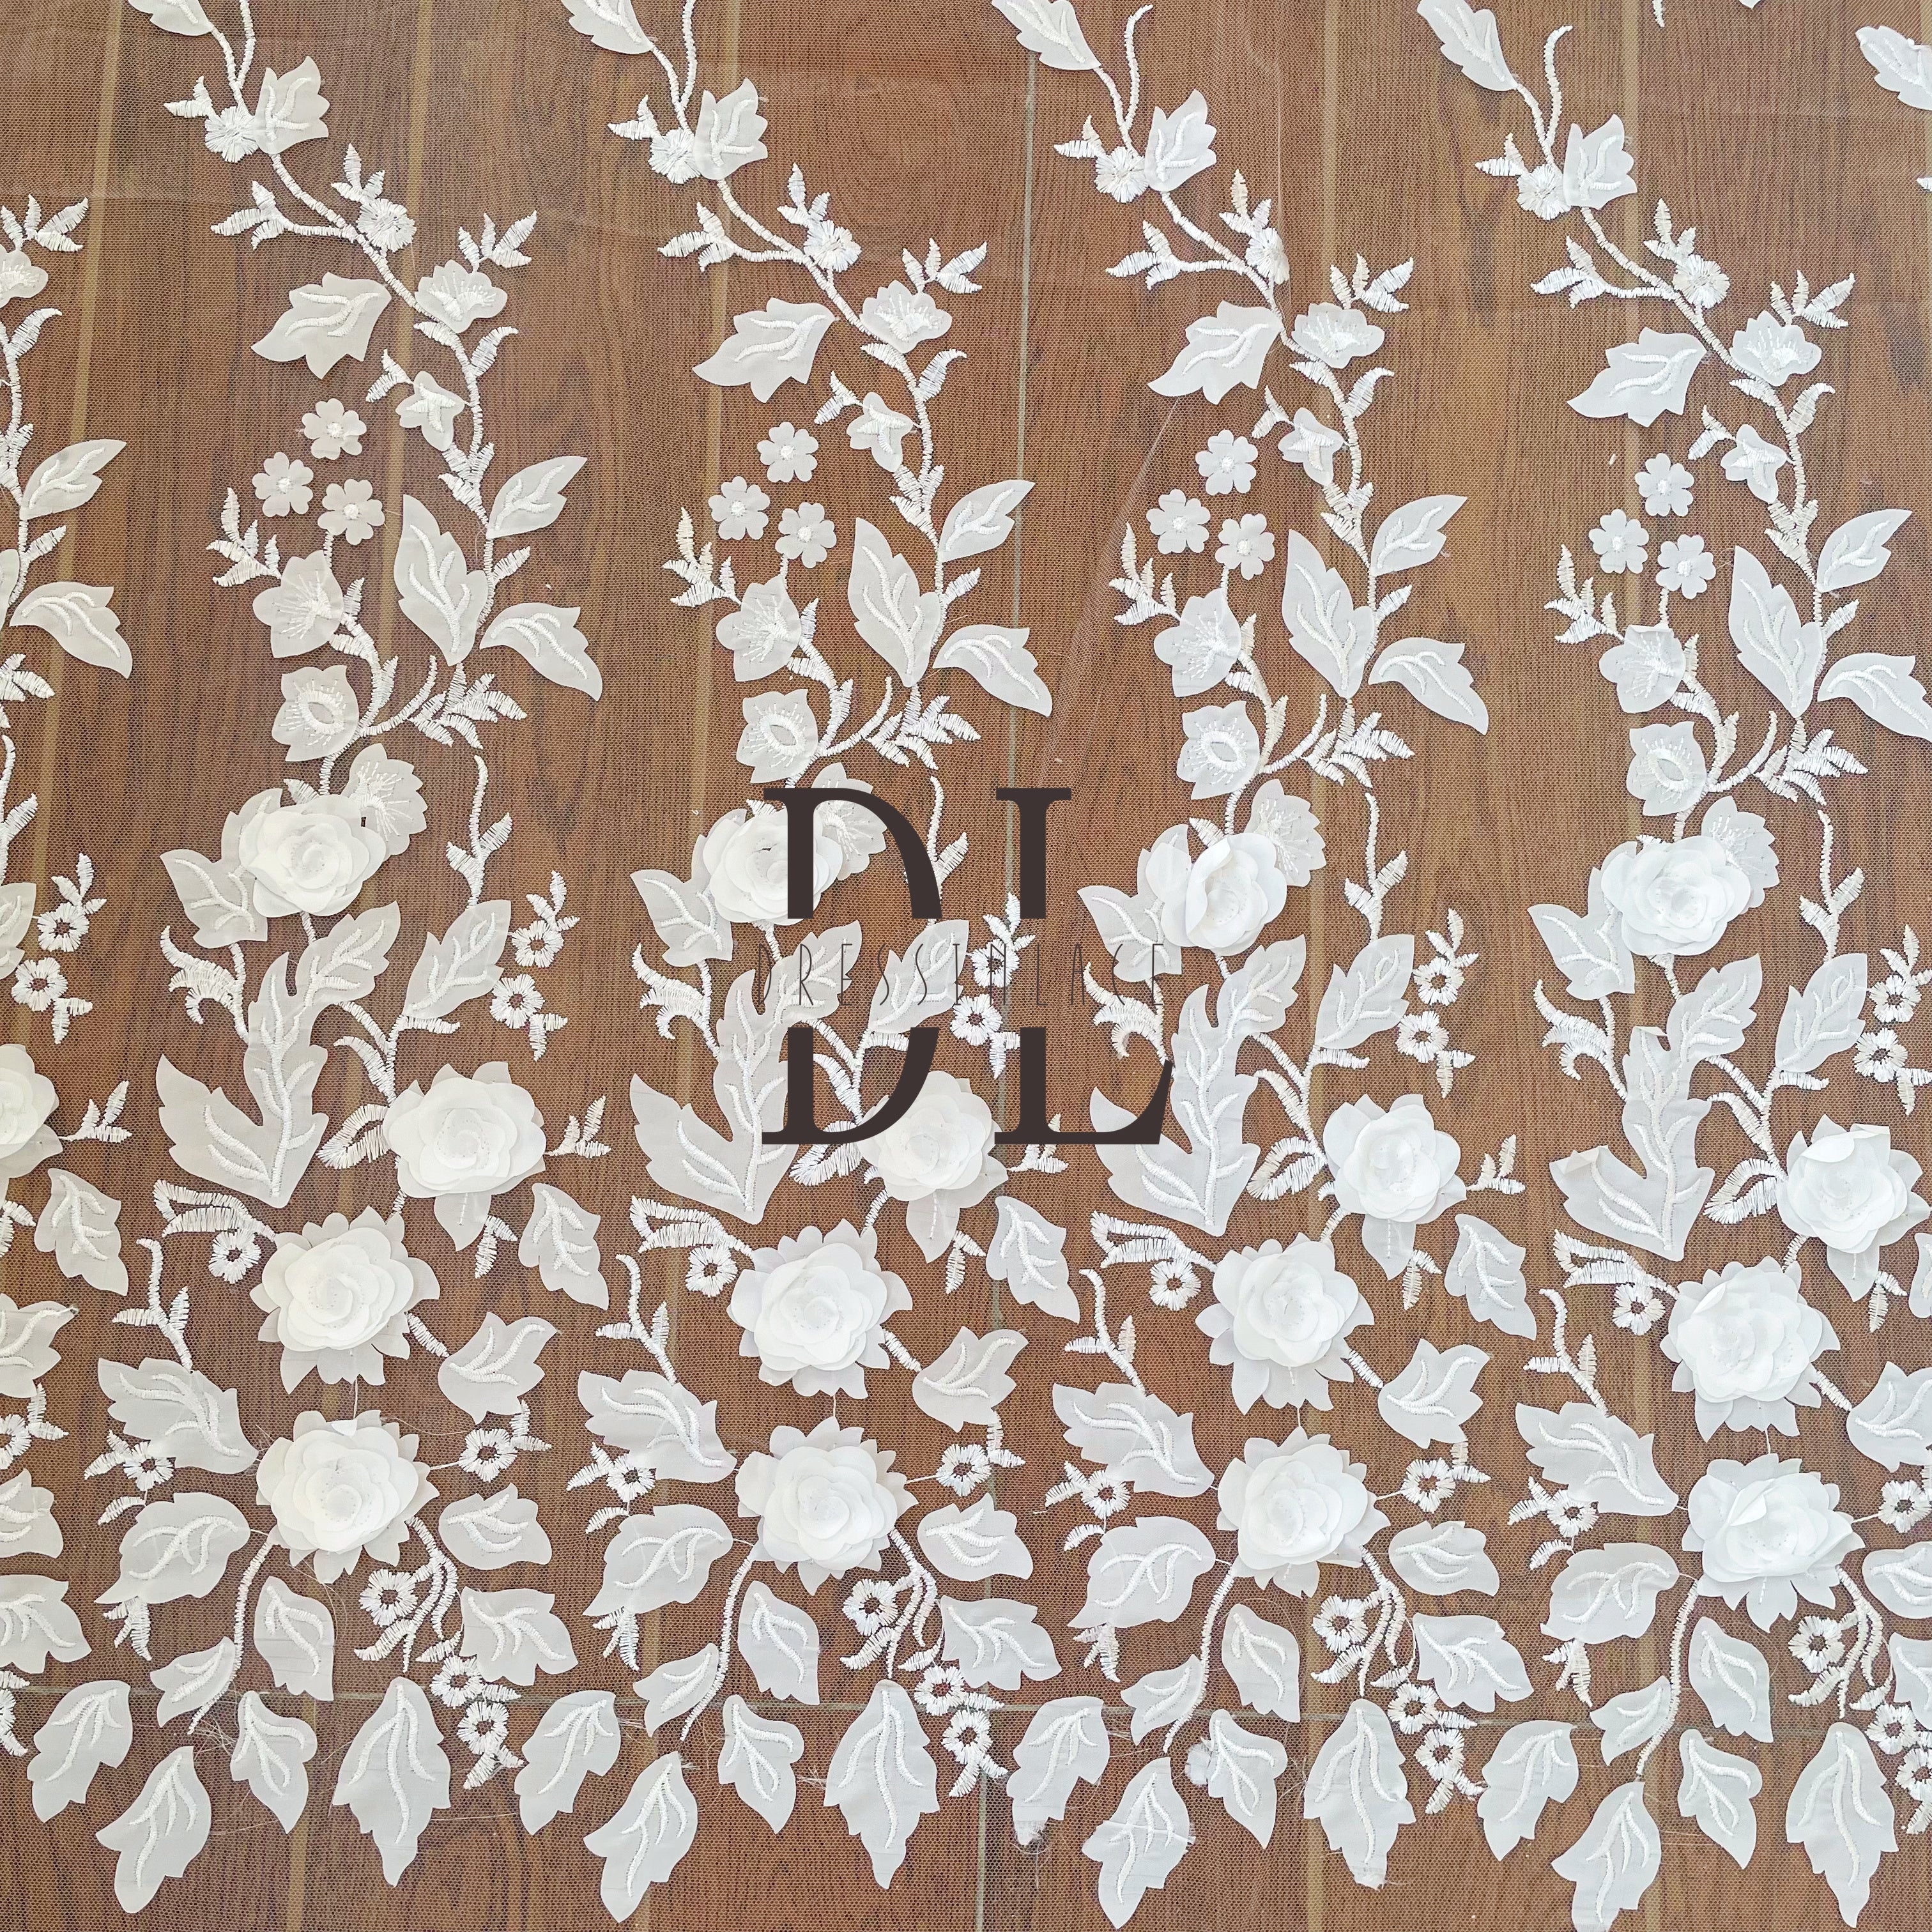 DL130146 Rose 3D flowers lace fabric DIY mesh fabrics Accessories for Bridal Wedding Dresses